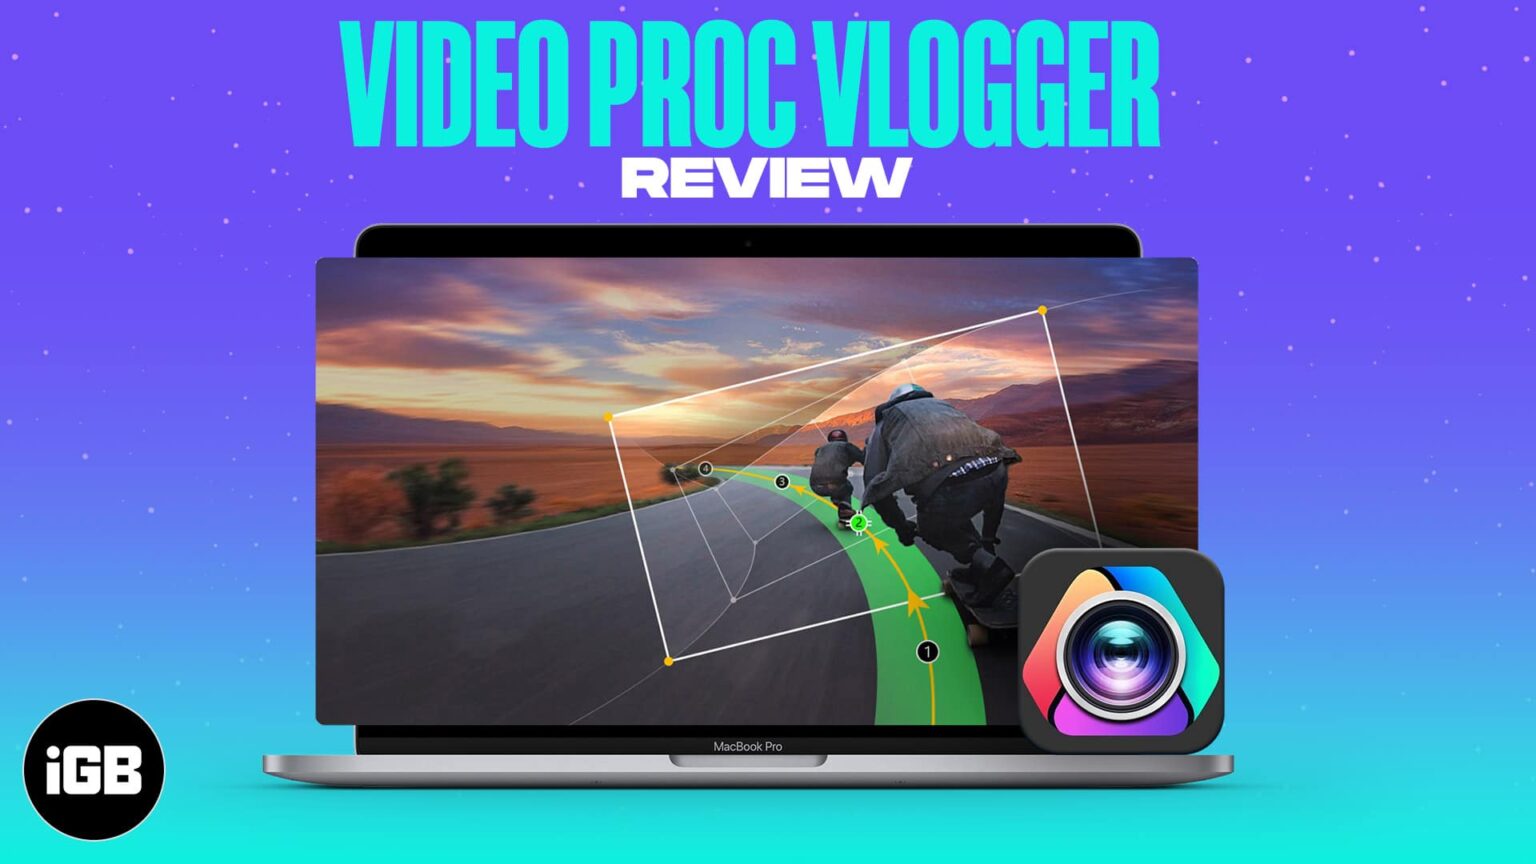 videoproc logger